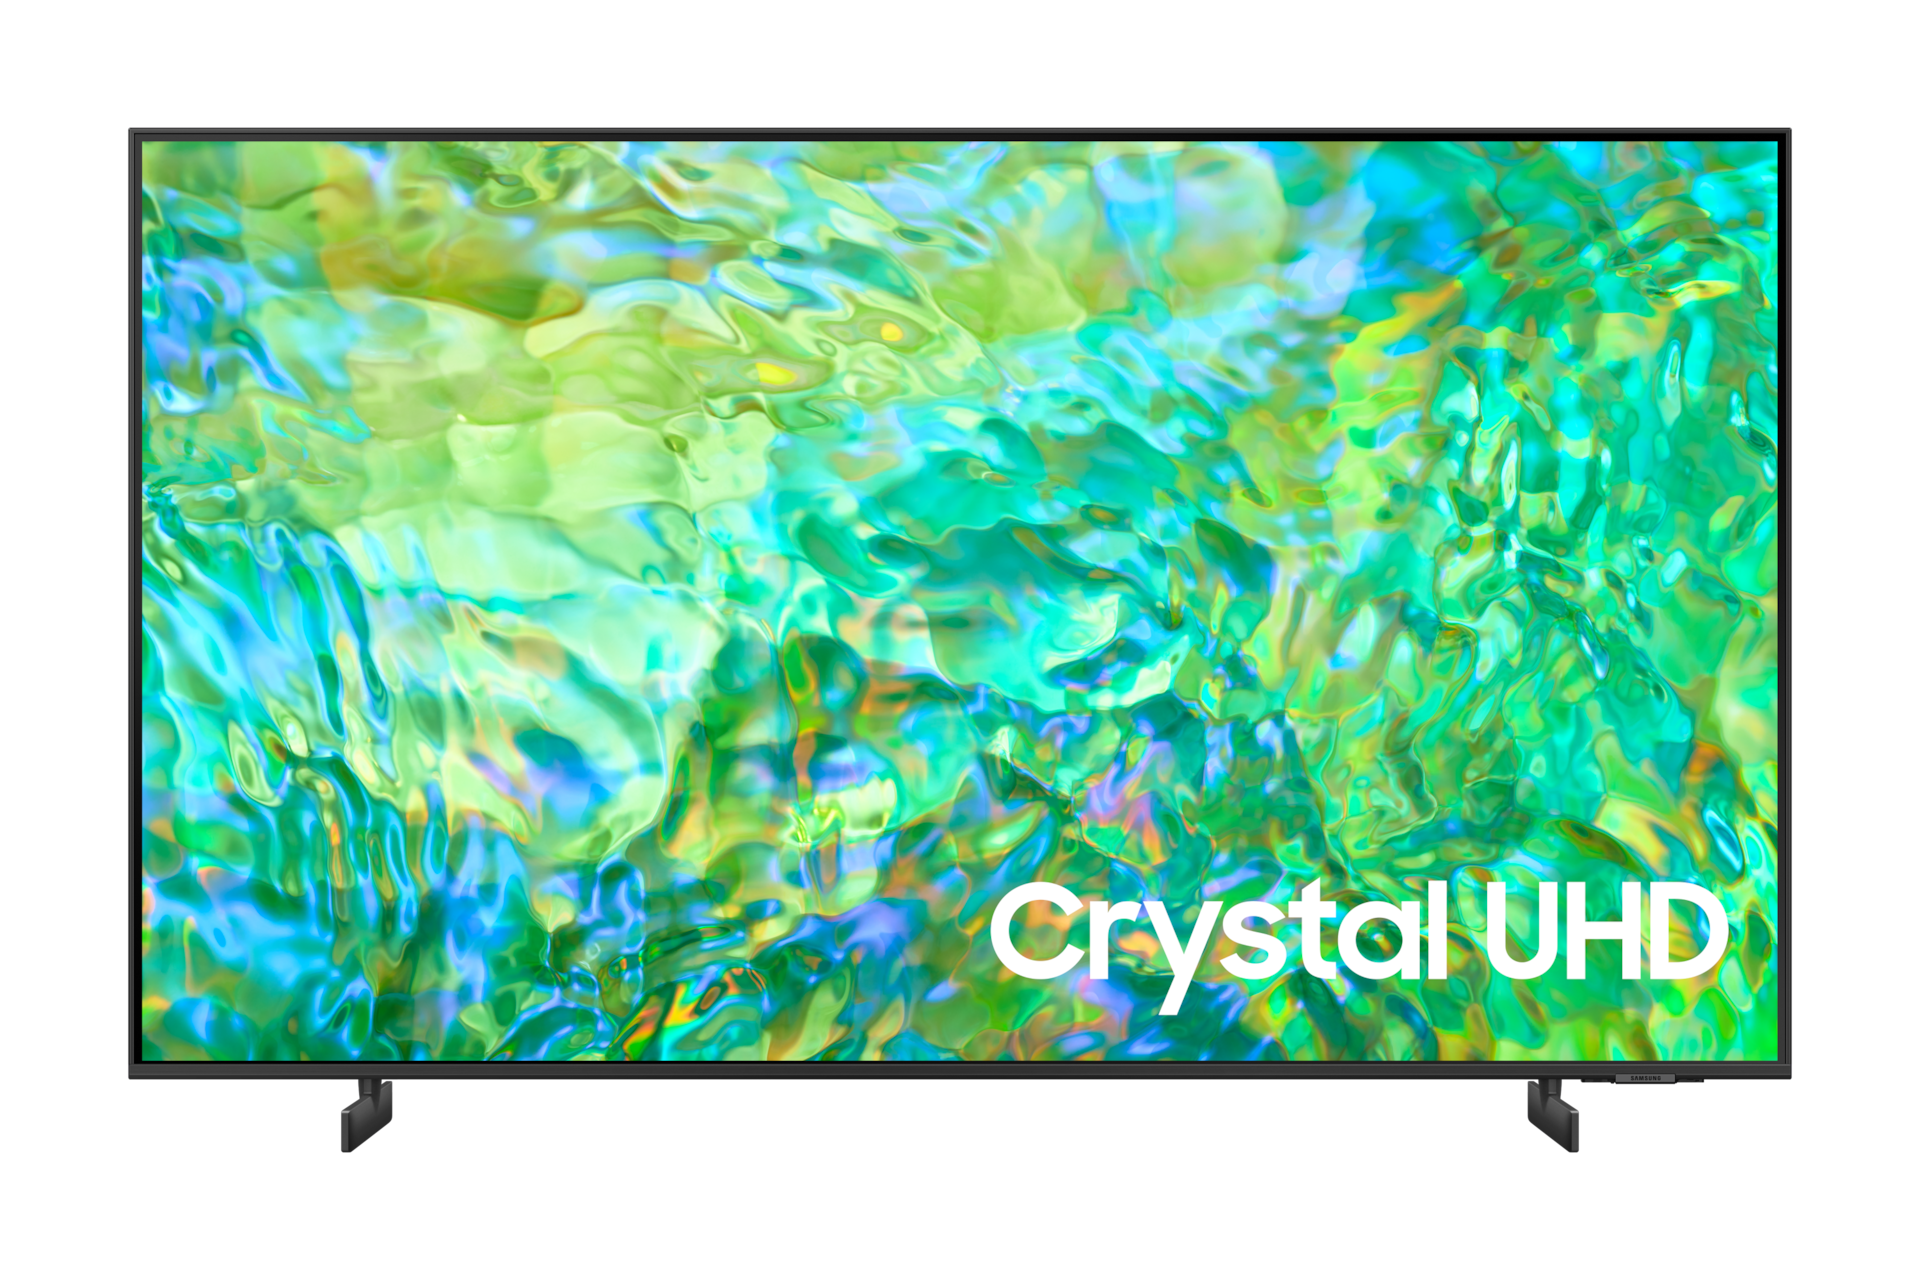 Televisor SAMSUNG Crystal UHD 65 4K Smart TV UN65CU8000GXPE (2023